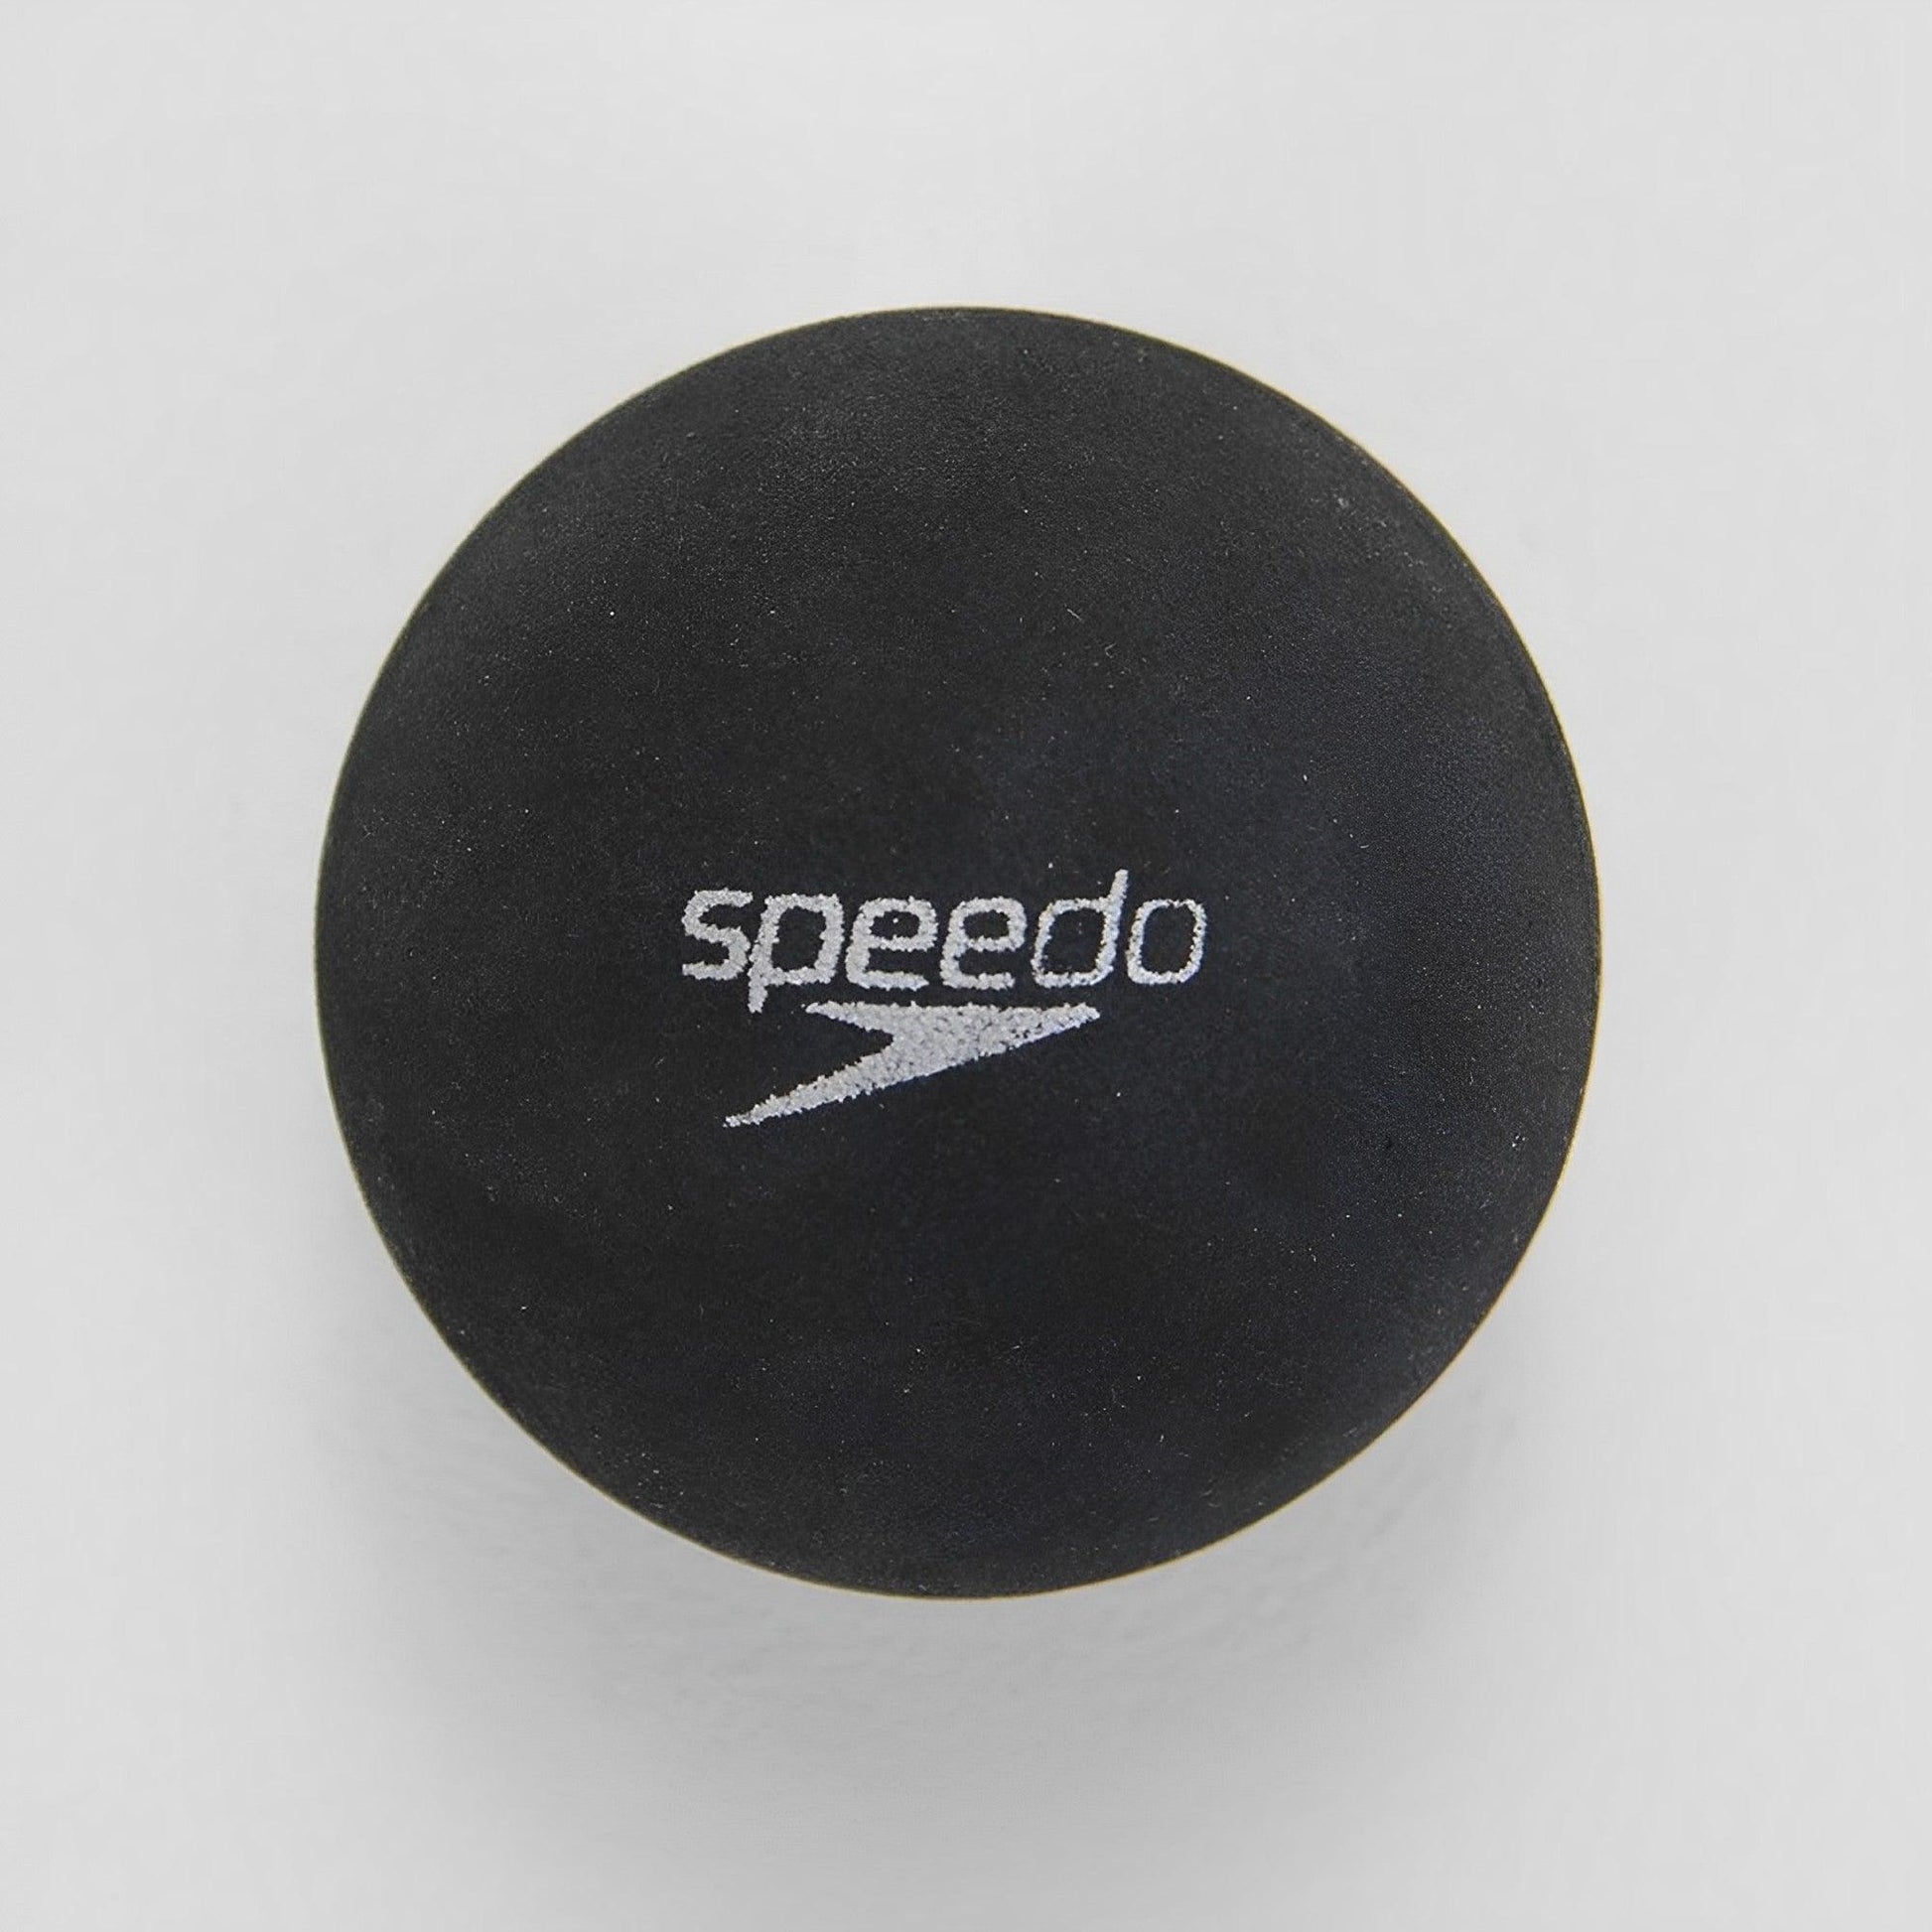 Speedo Frescobol Paddleball Set - Brazilian Shop